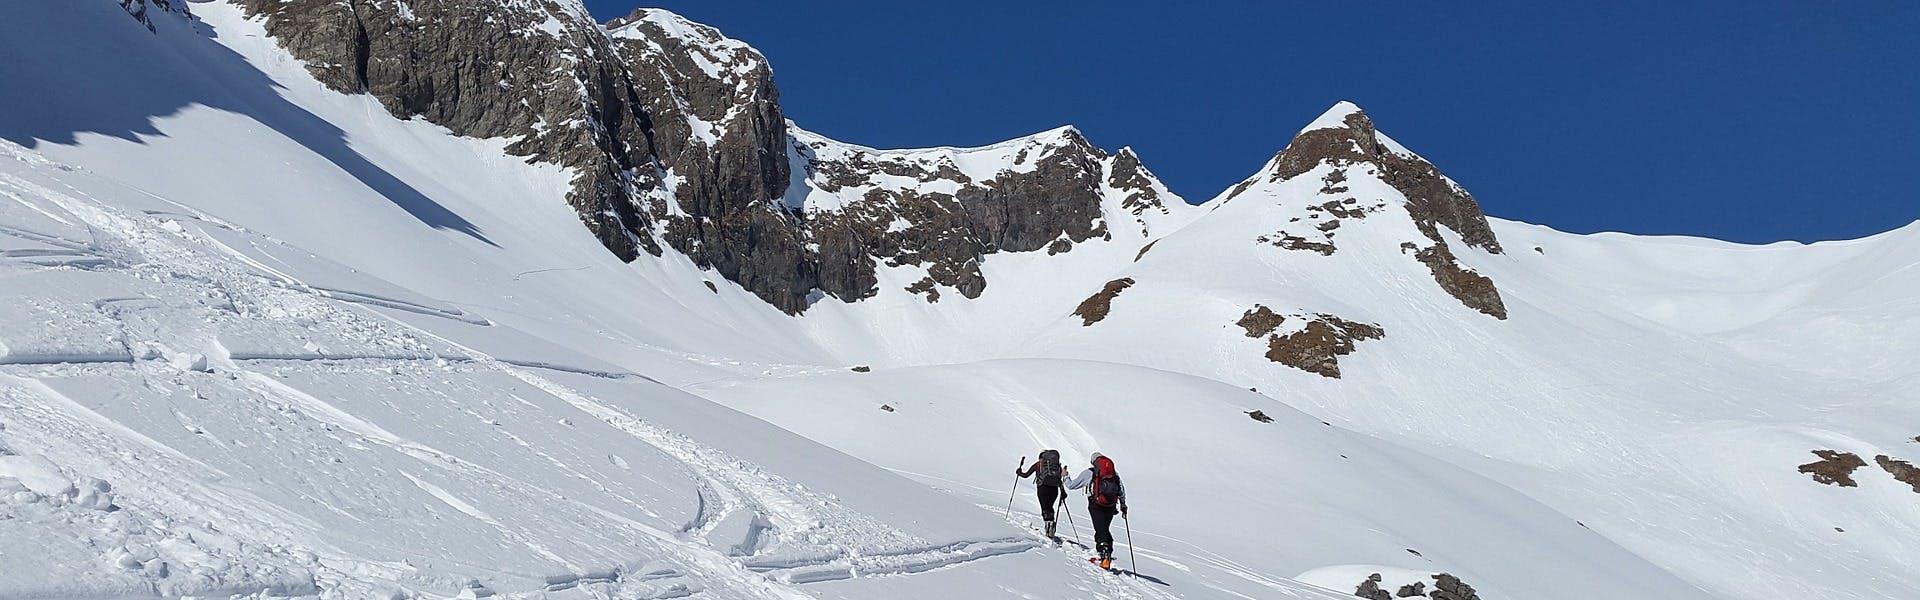 Two people backcountry ski uphill.